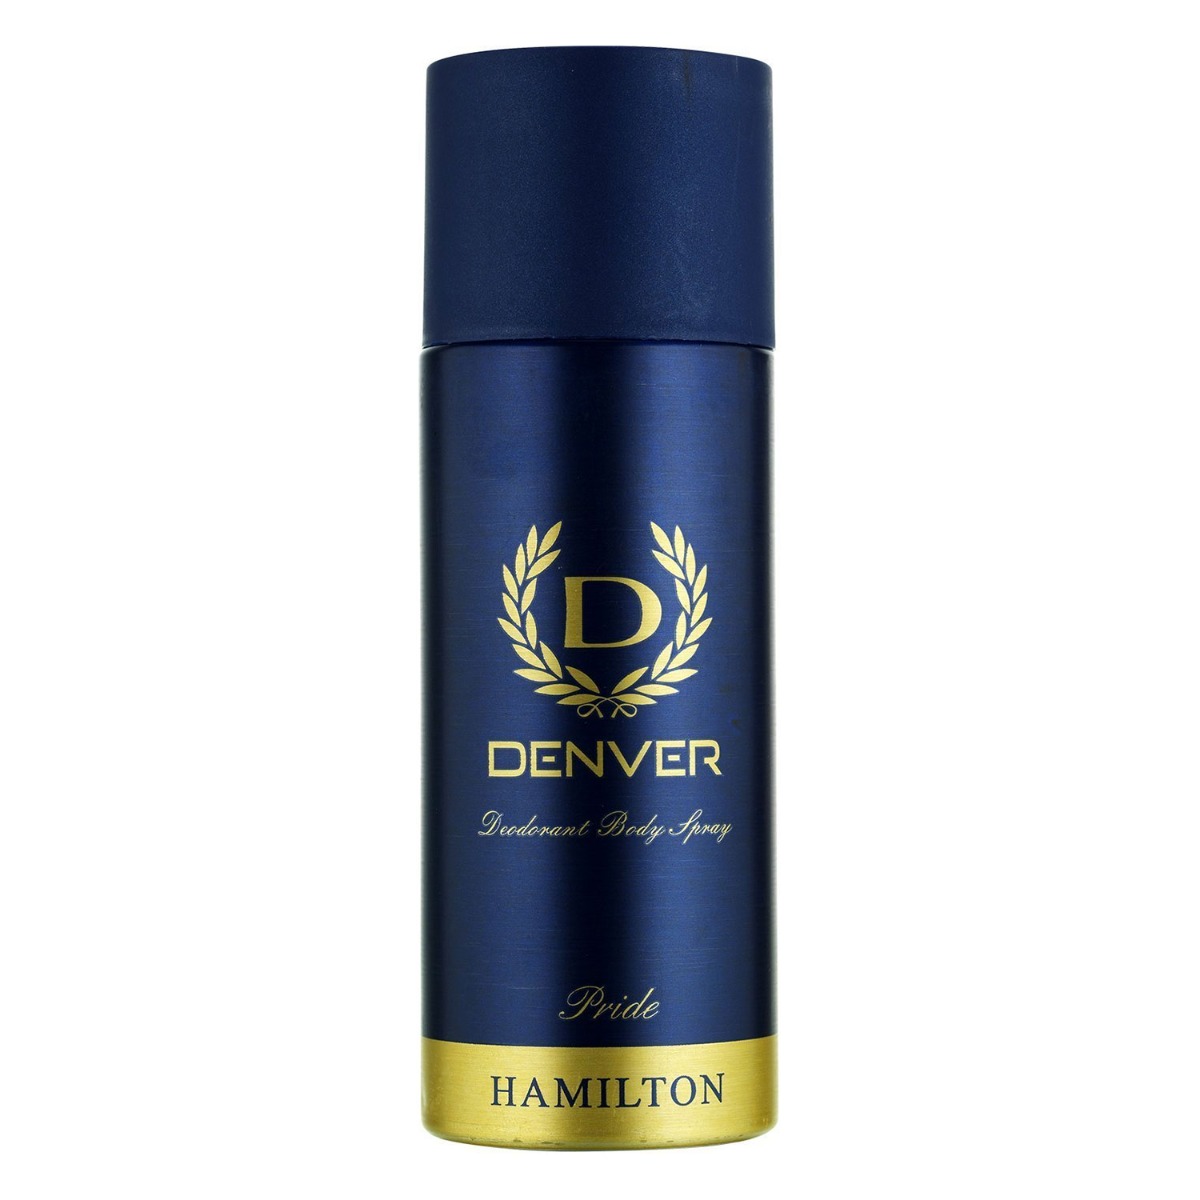 Denver Hamilton Pride Deodorant Body Spray, 165ml